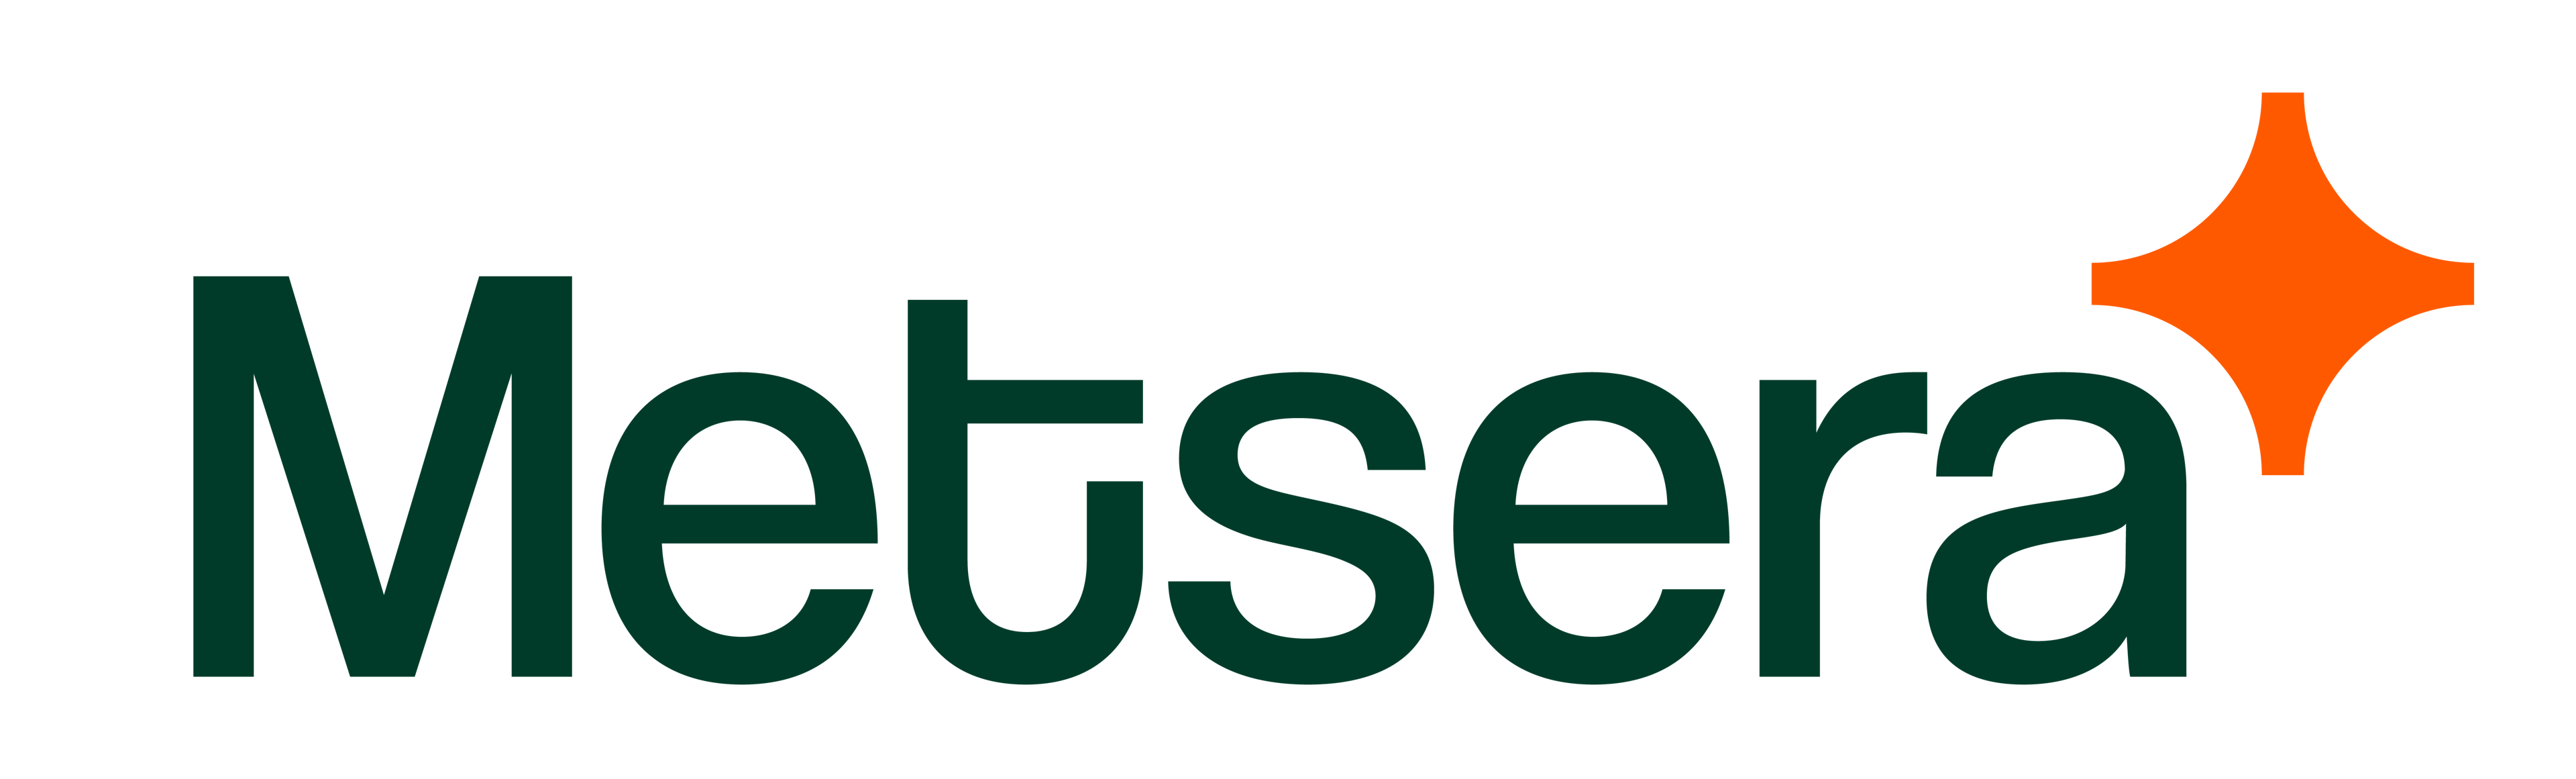 Vision Fund investment portfolio company Metsera's logo